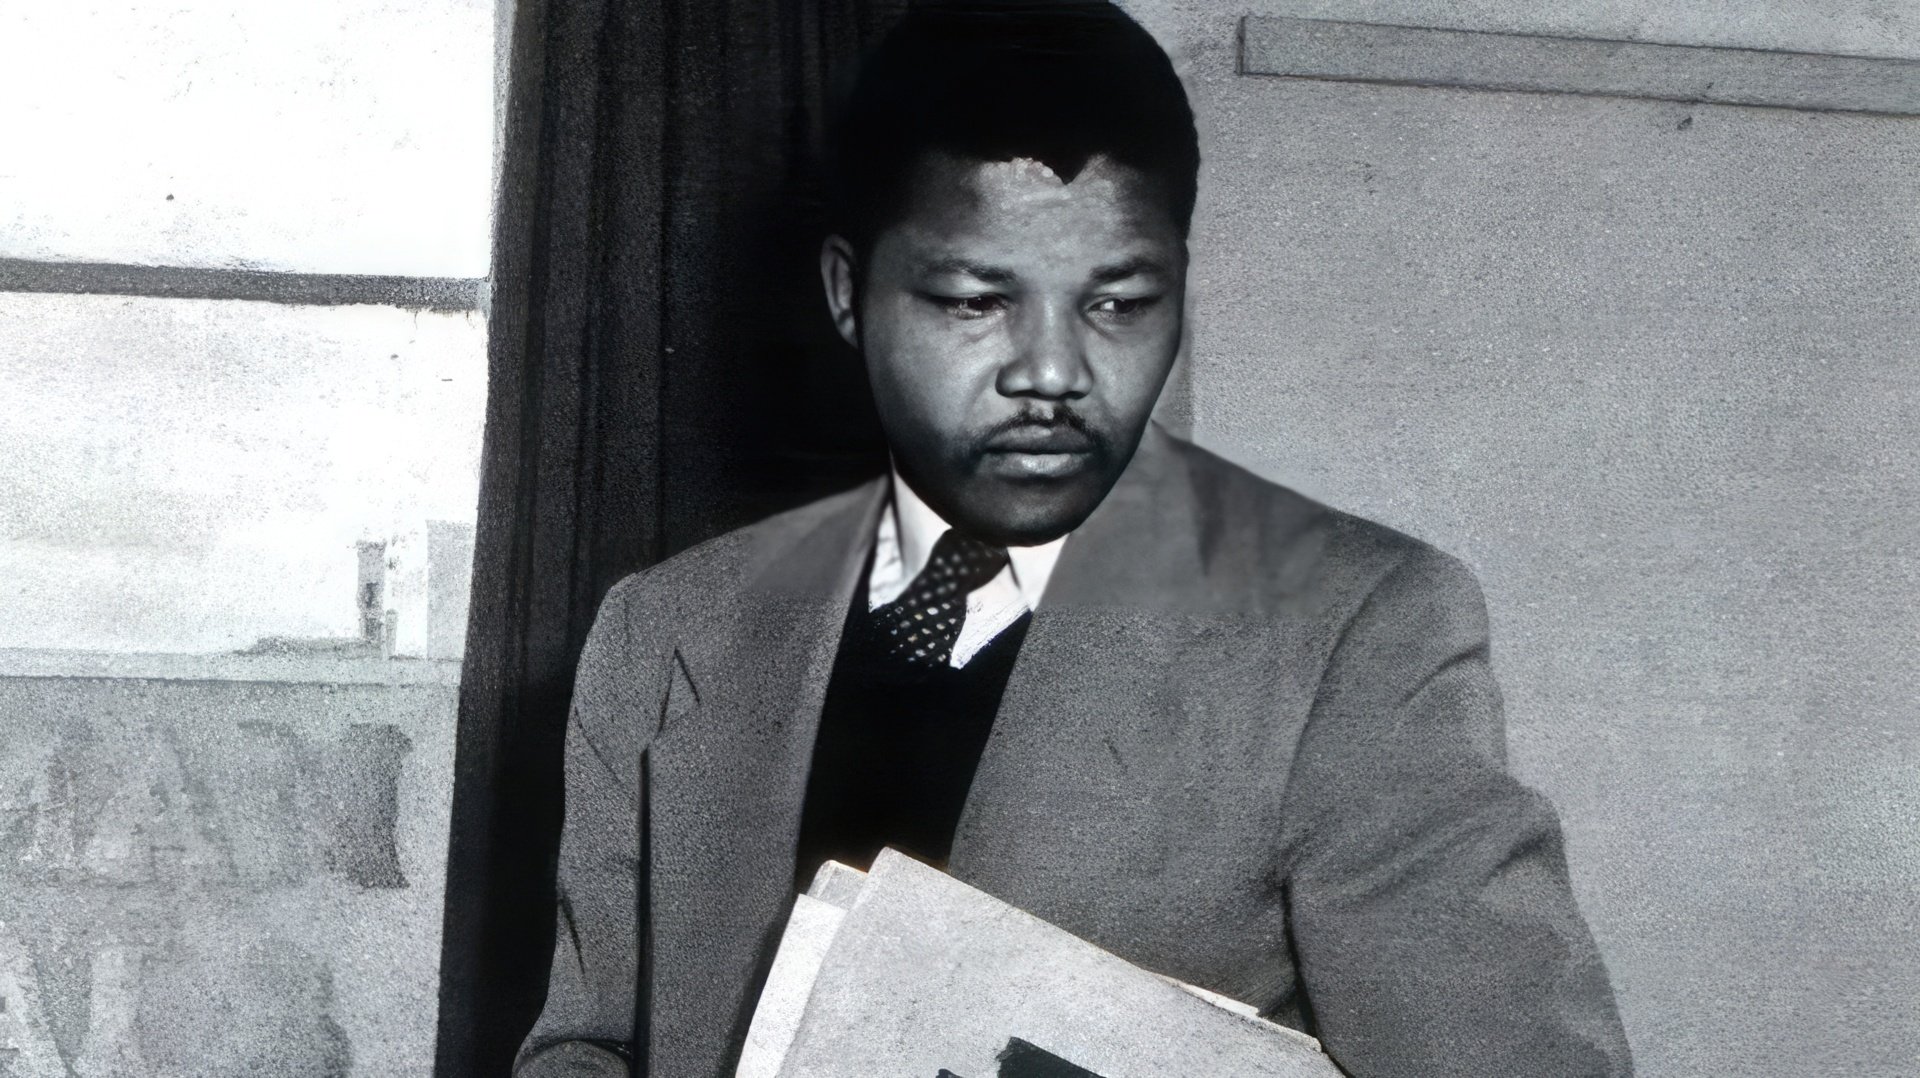 Nelson Mandela at the university